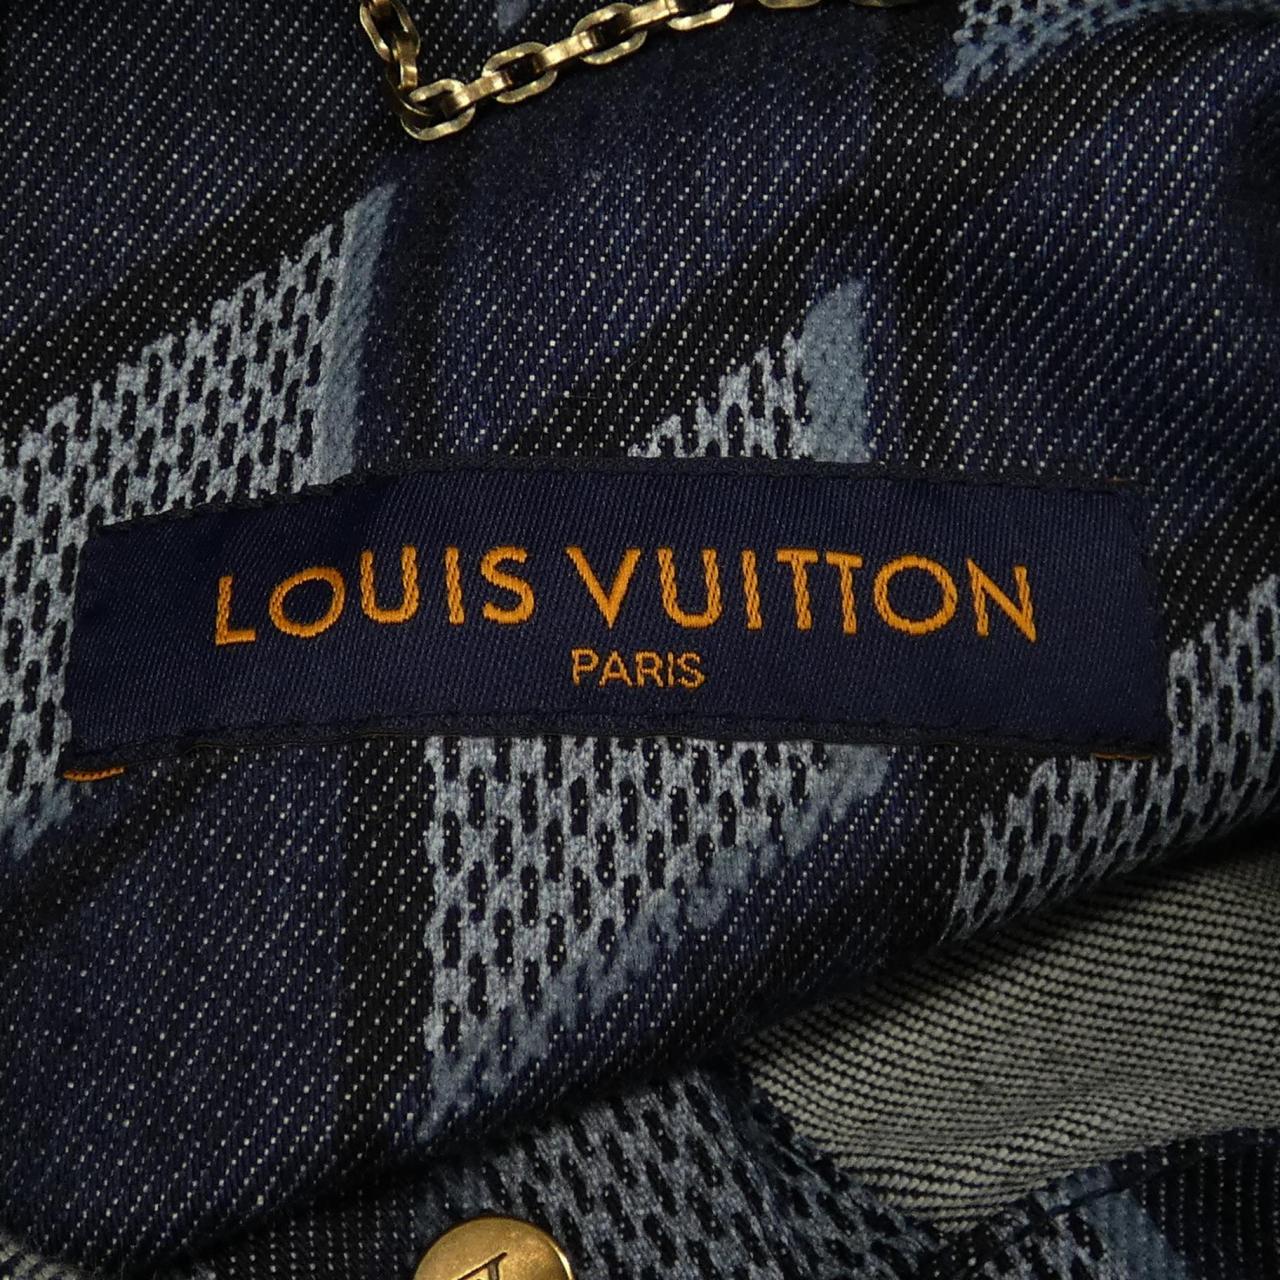 LOUIS VUITTON VUITTON S/S shirt